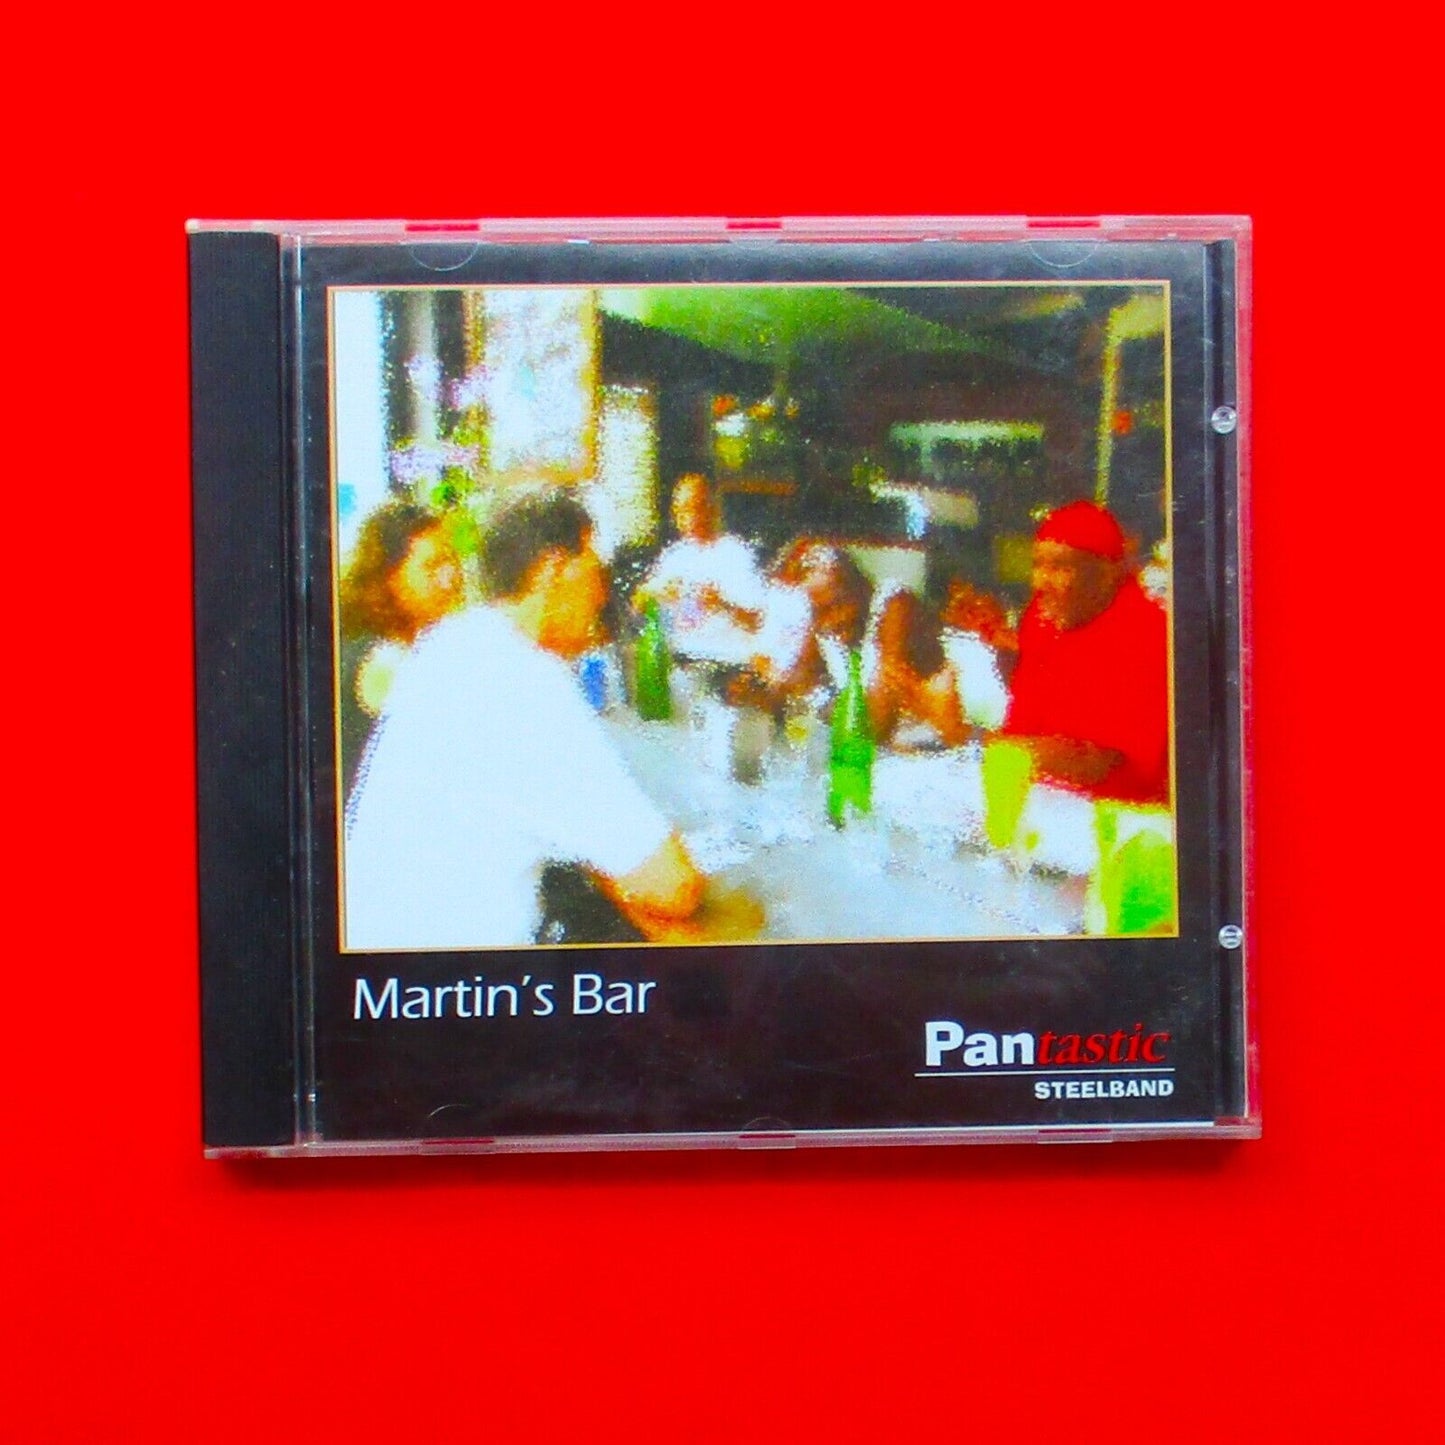 Pantastic Steelband Martin's Bar 2005 CD Album Queensland Australian Music